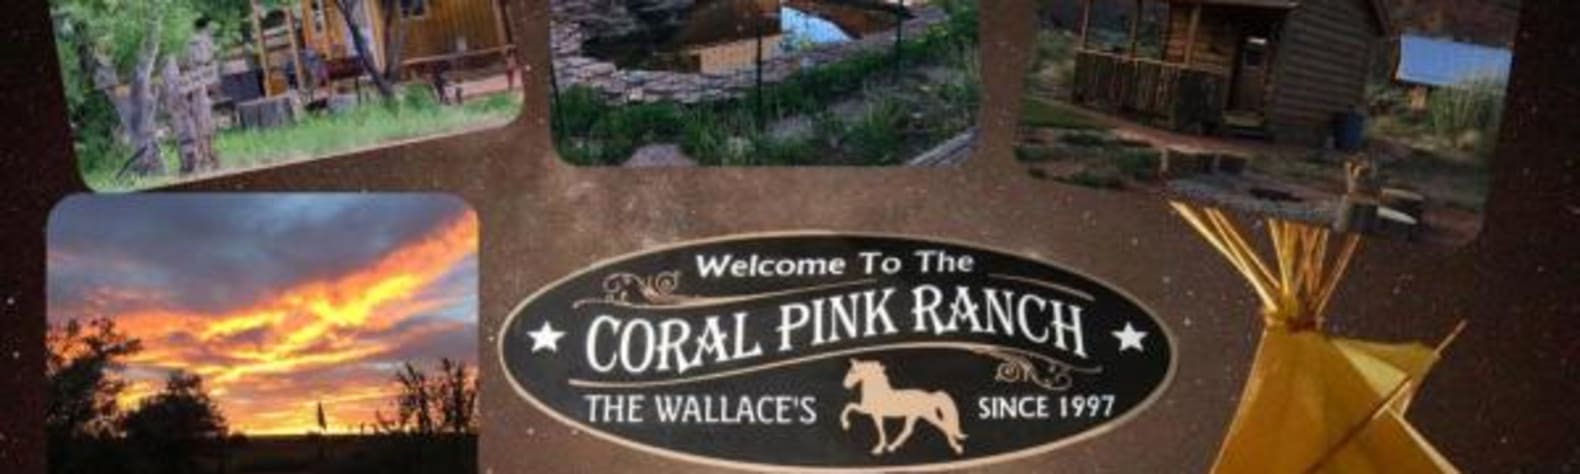 Coral Pink Ranch Cowboy Camp